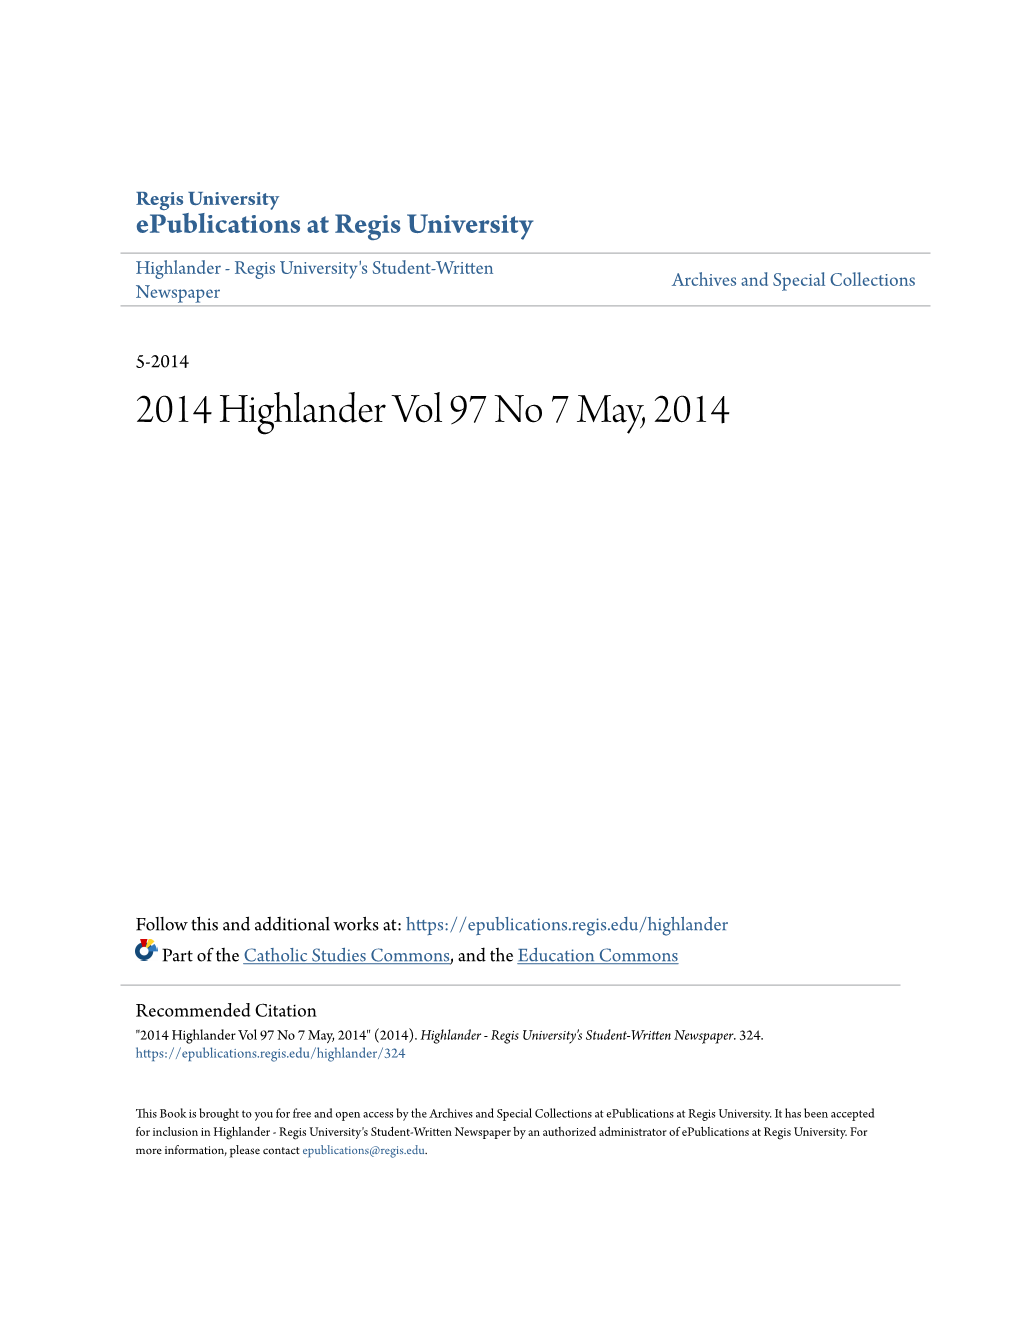 2014 Highlander Vol 97 No 7 May, 2014